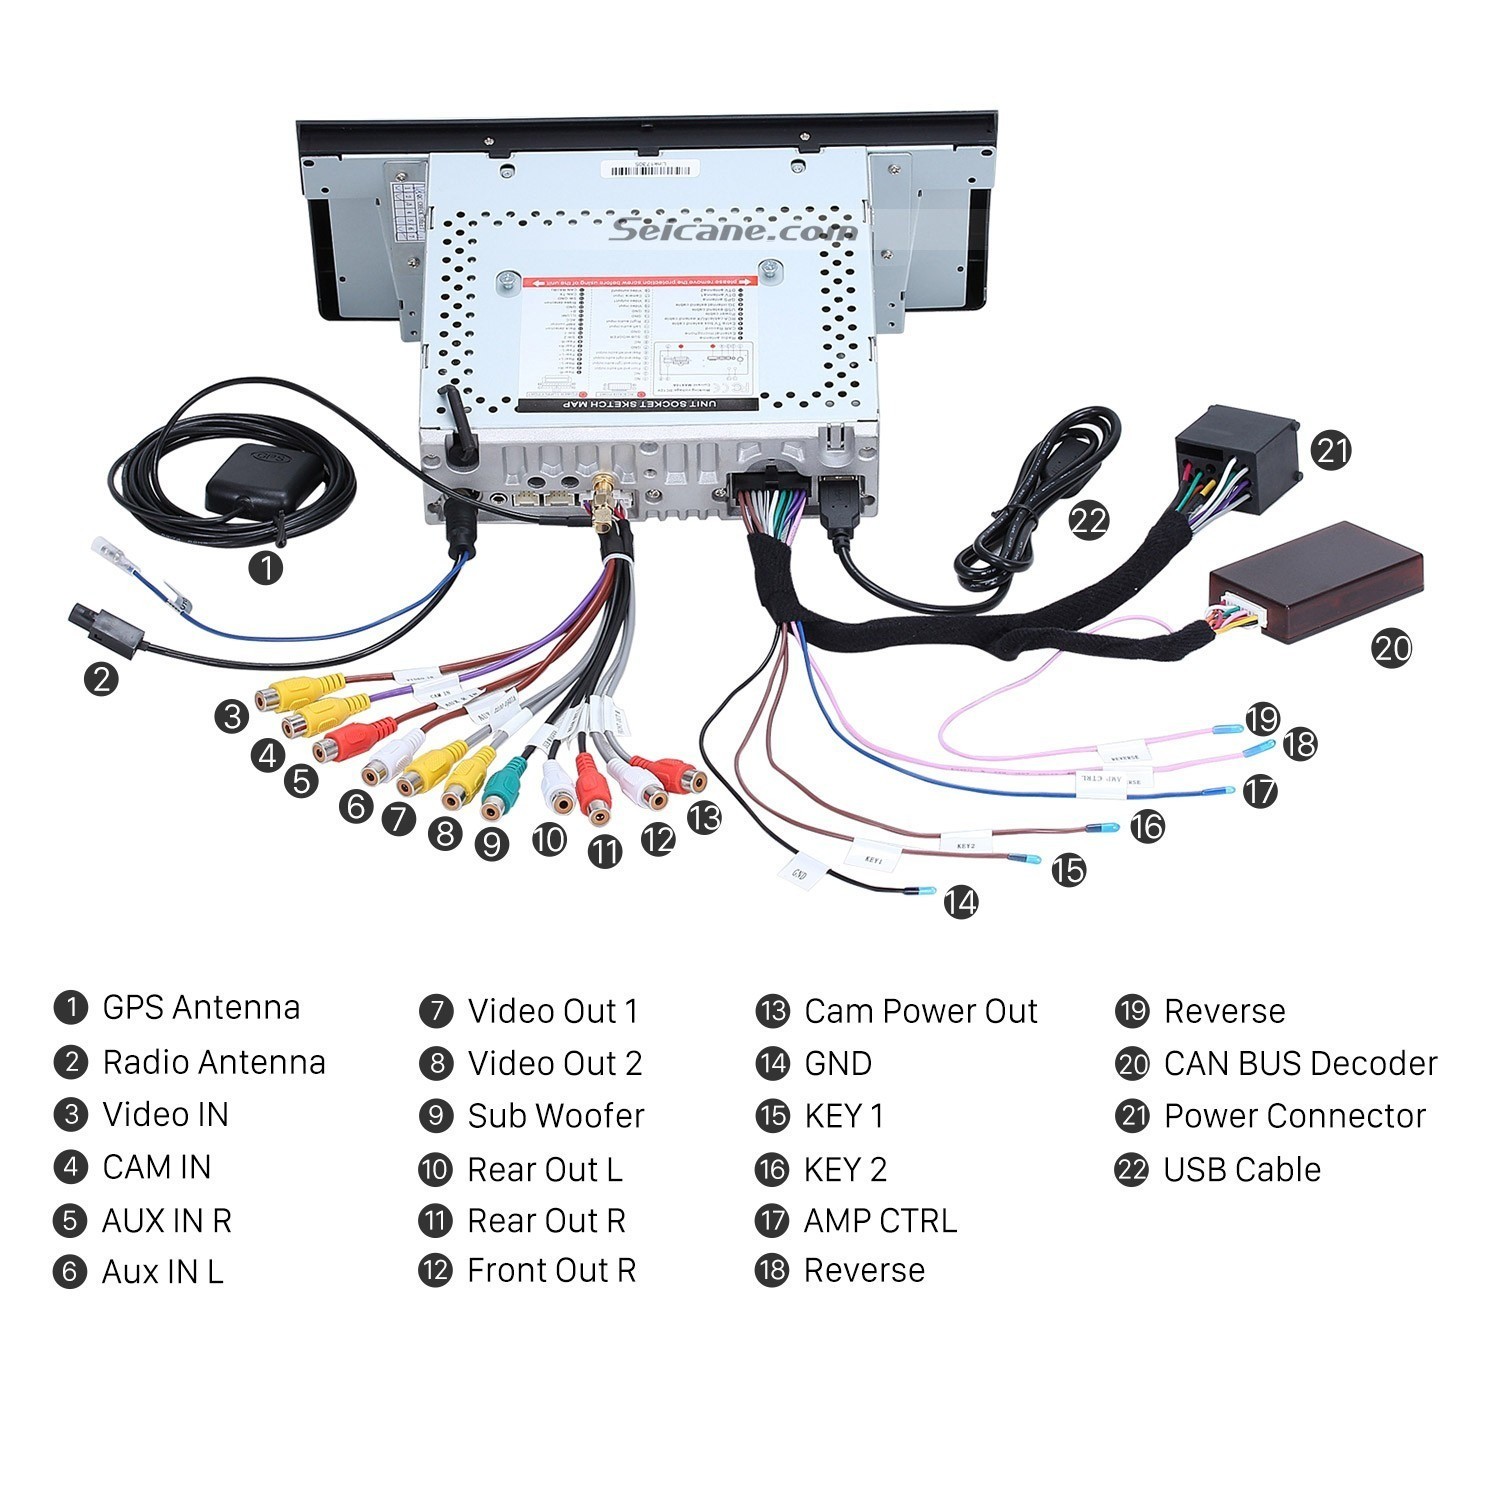 Car Amplifier Wire Diagram Wiring Diagram Car Stereo Amplifier Best Diagram A Car Best Car Of Car Amplifier Wire Diagram